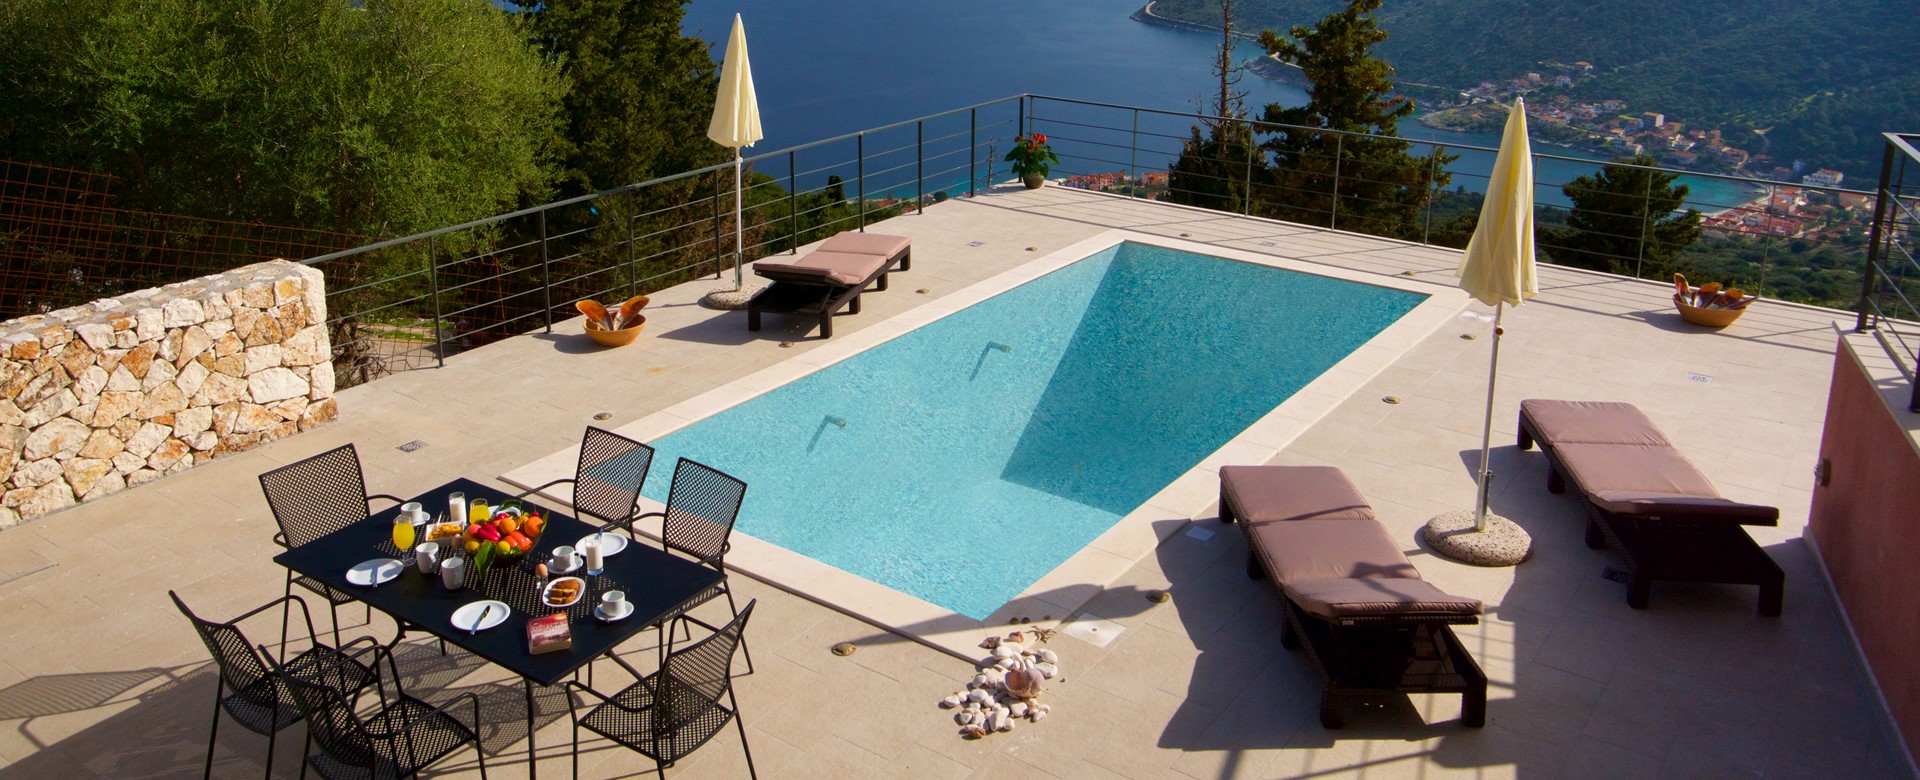 Outside dining, pool, sun beds and views outside Villa Amore, Agia Efimia, Kefalonia, Greek Islands